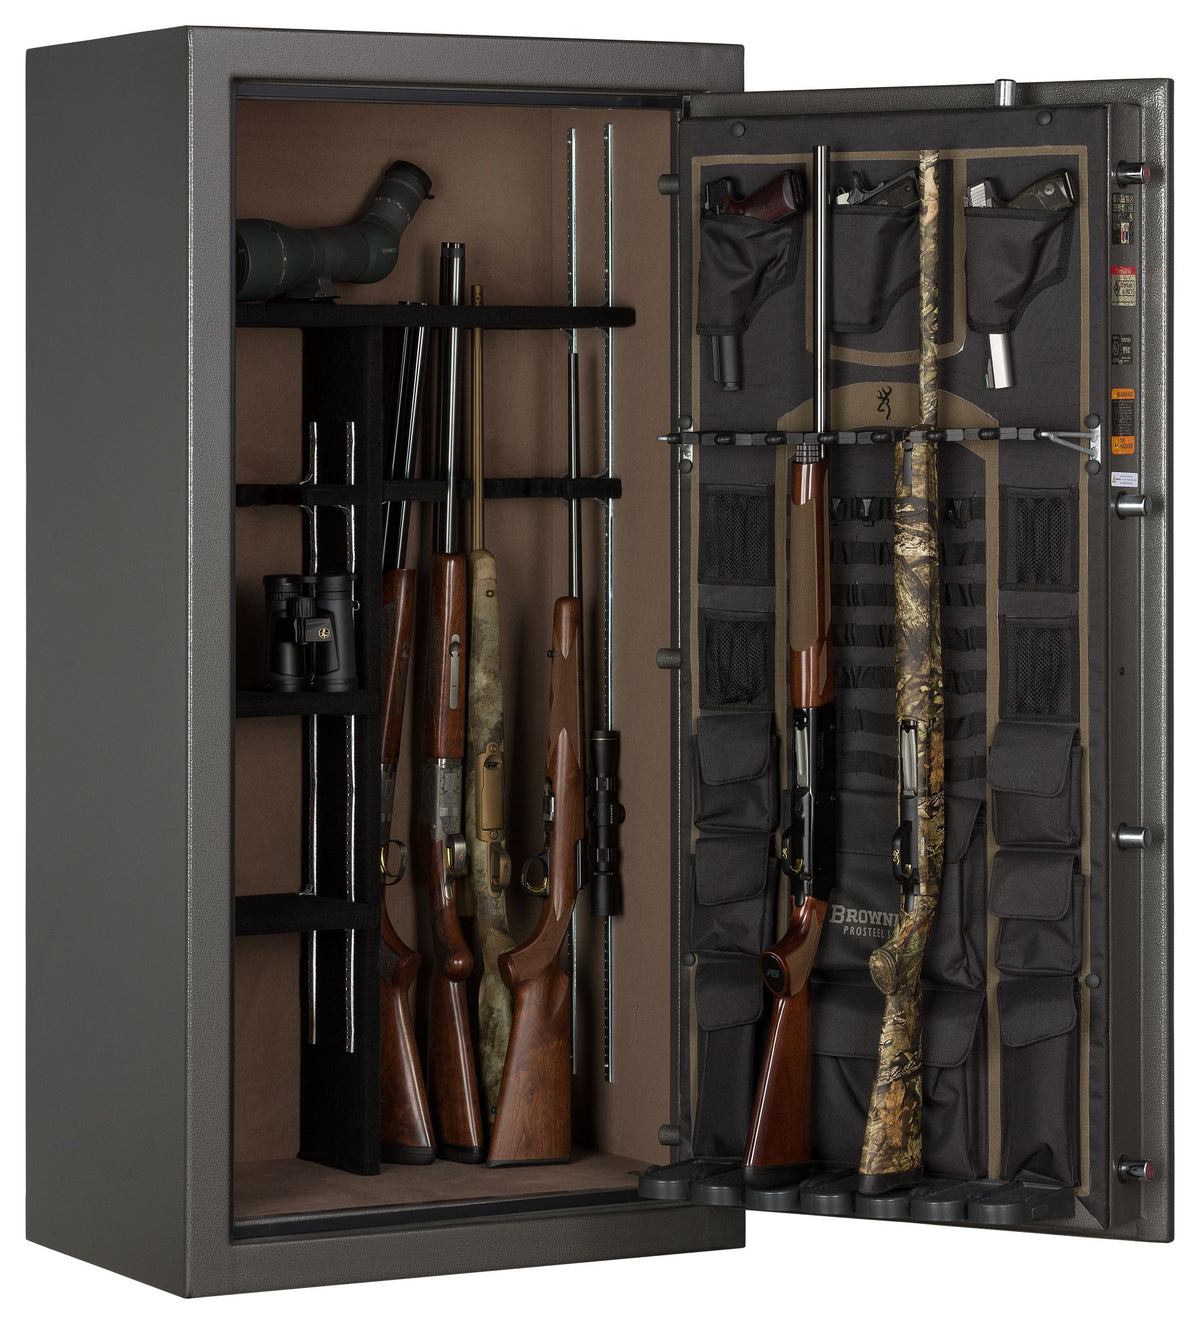 Browning HTR23 Hunter Series Closet Gun Safe Door Open